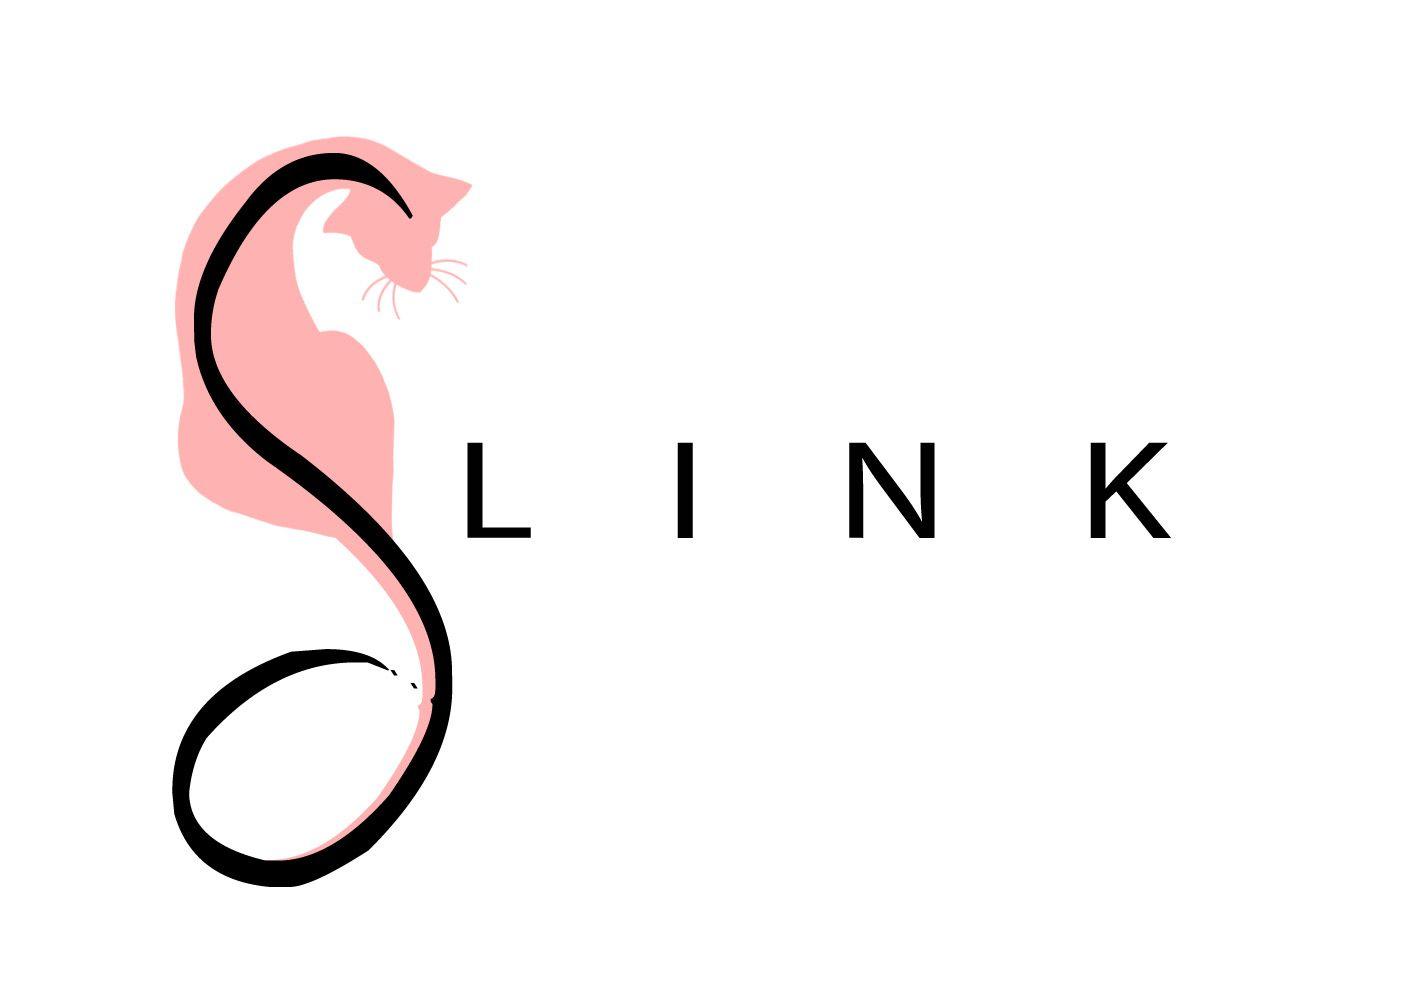 Slink Logo - Logo idea 4 | Slink Style